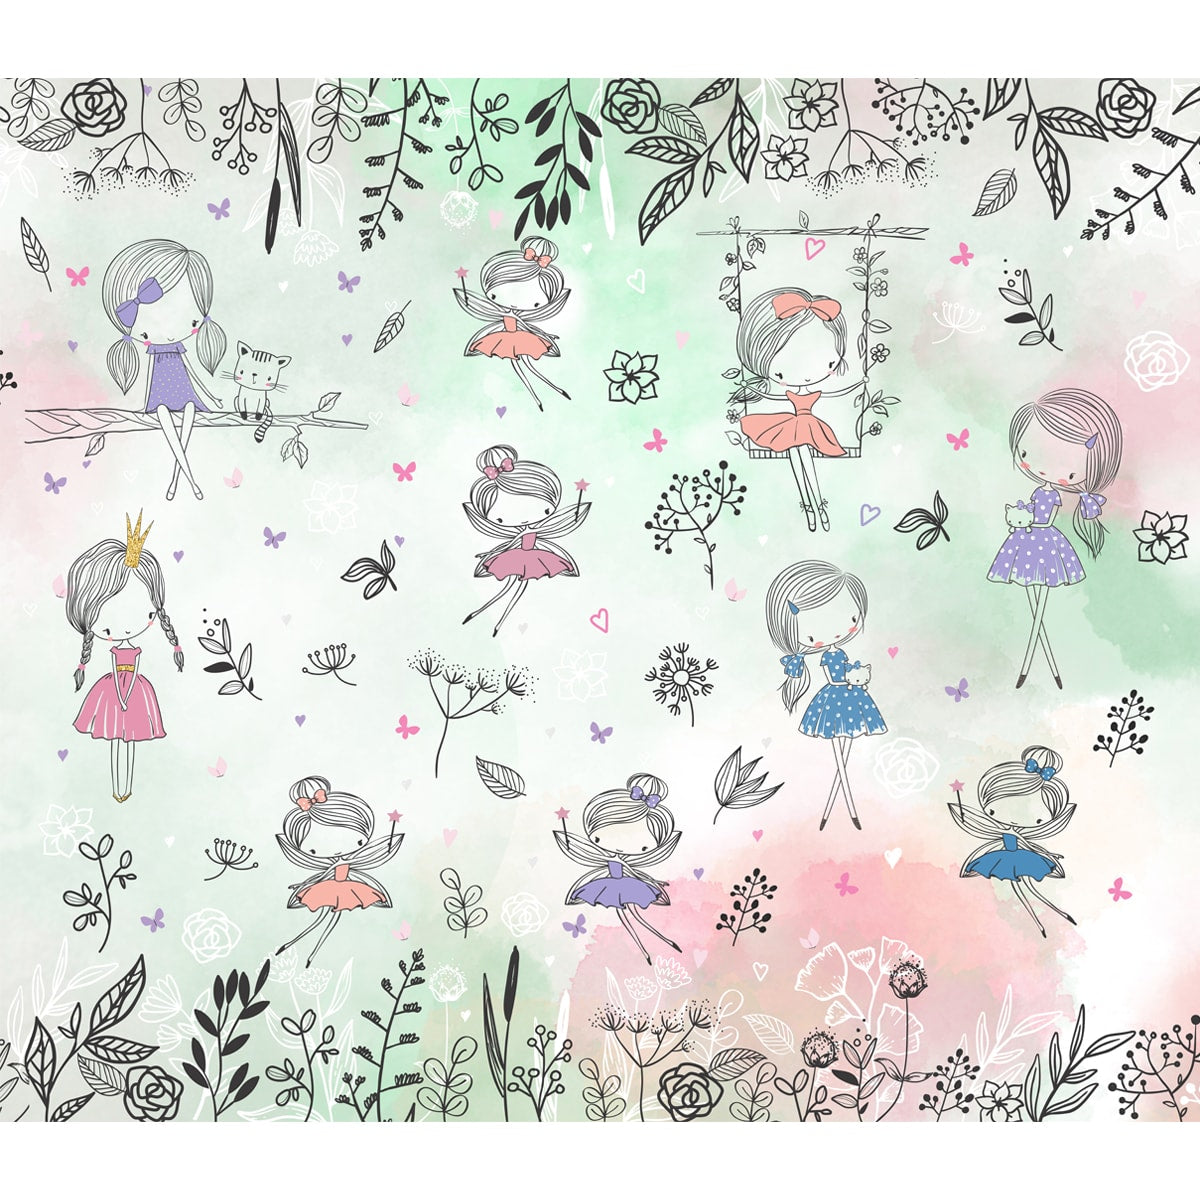 Fairies Wallpaper for Kids Room, Customised for Walls